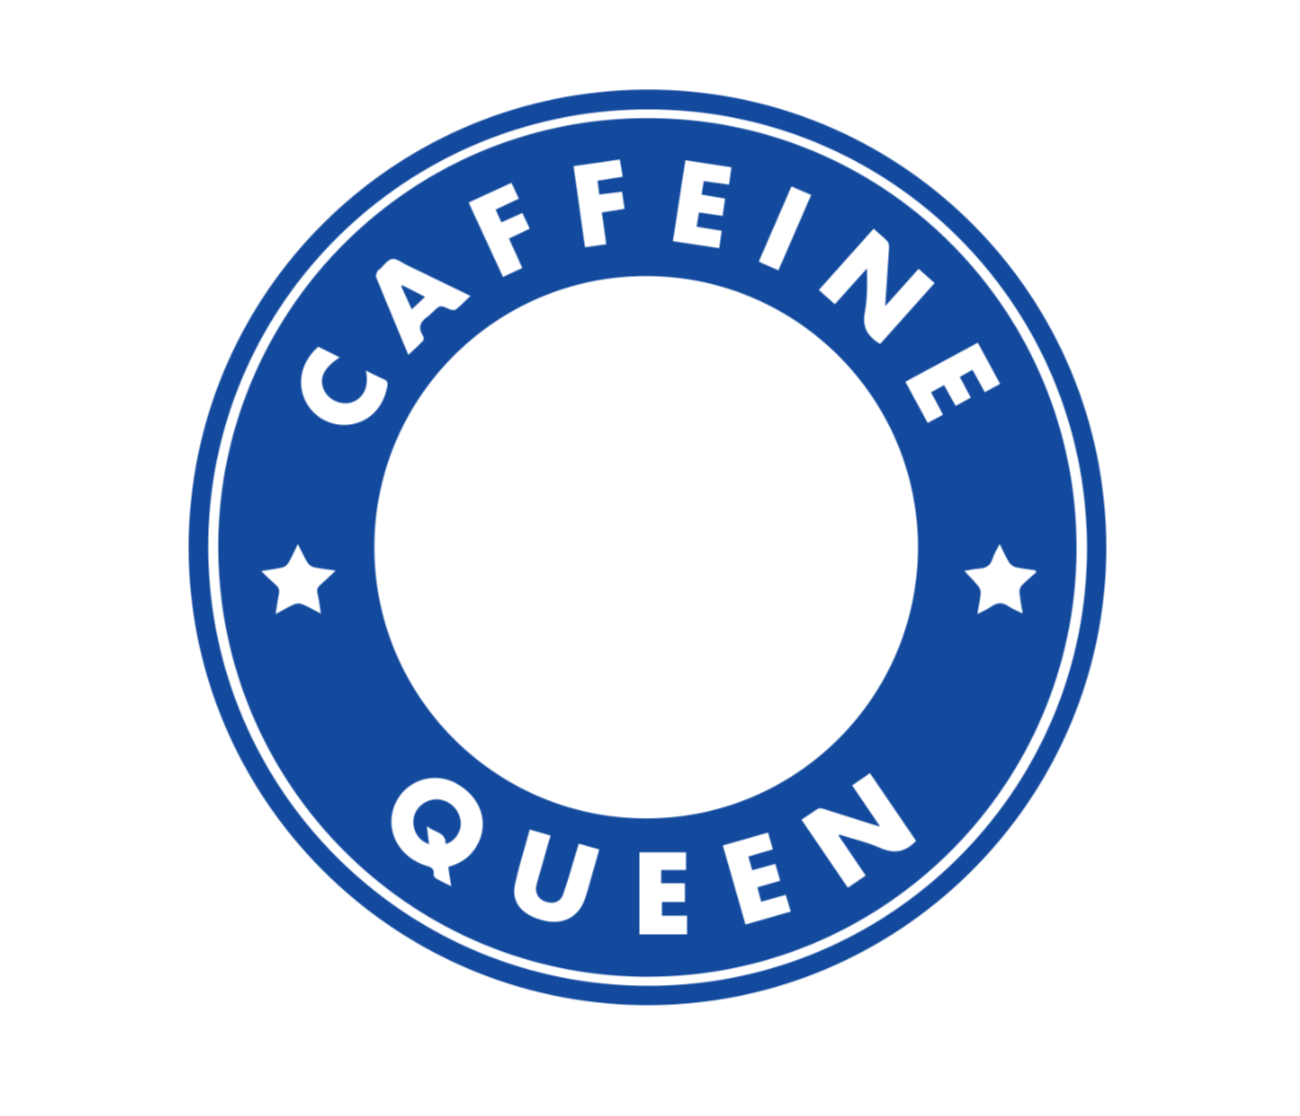 Download Caffeine Queen Kayla Makes